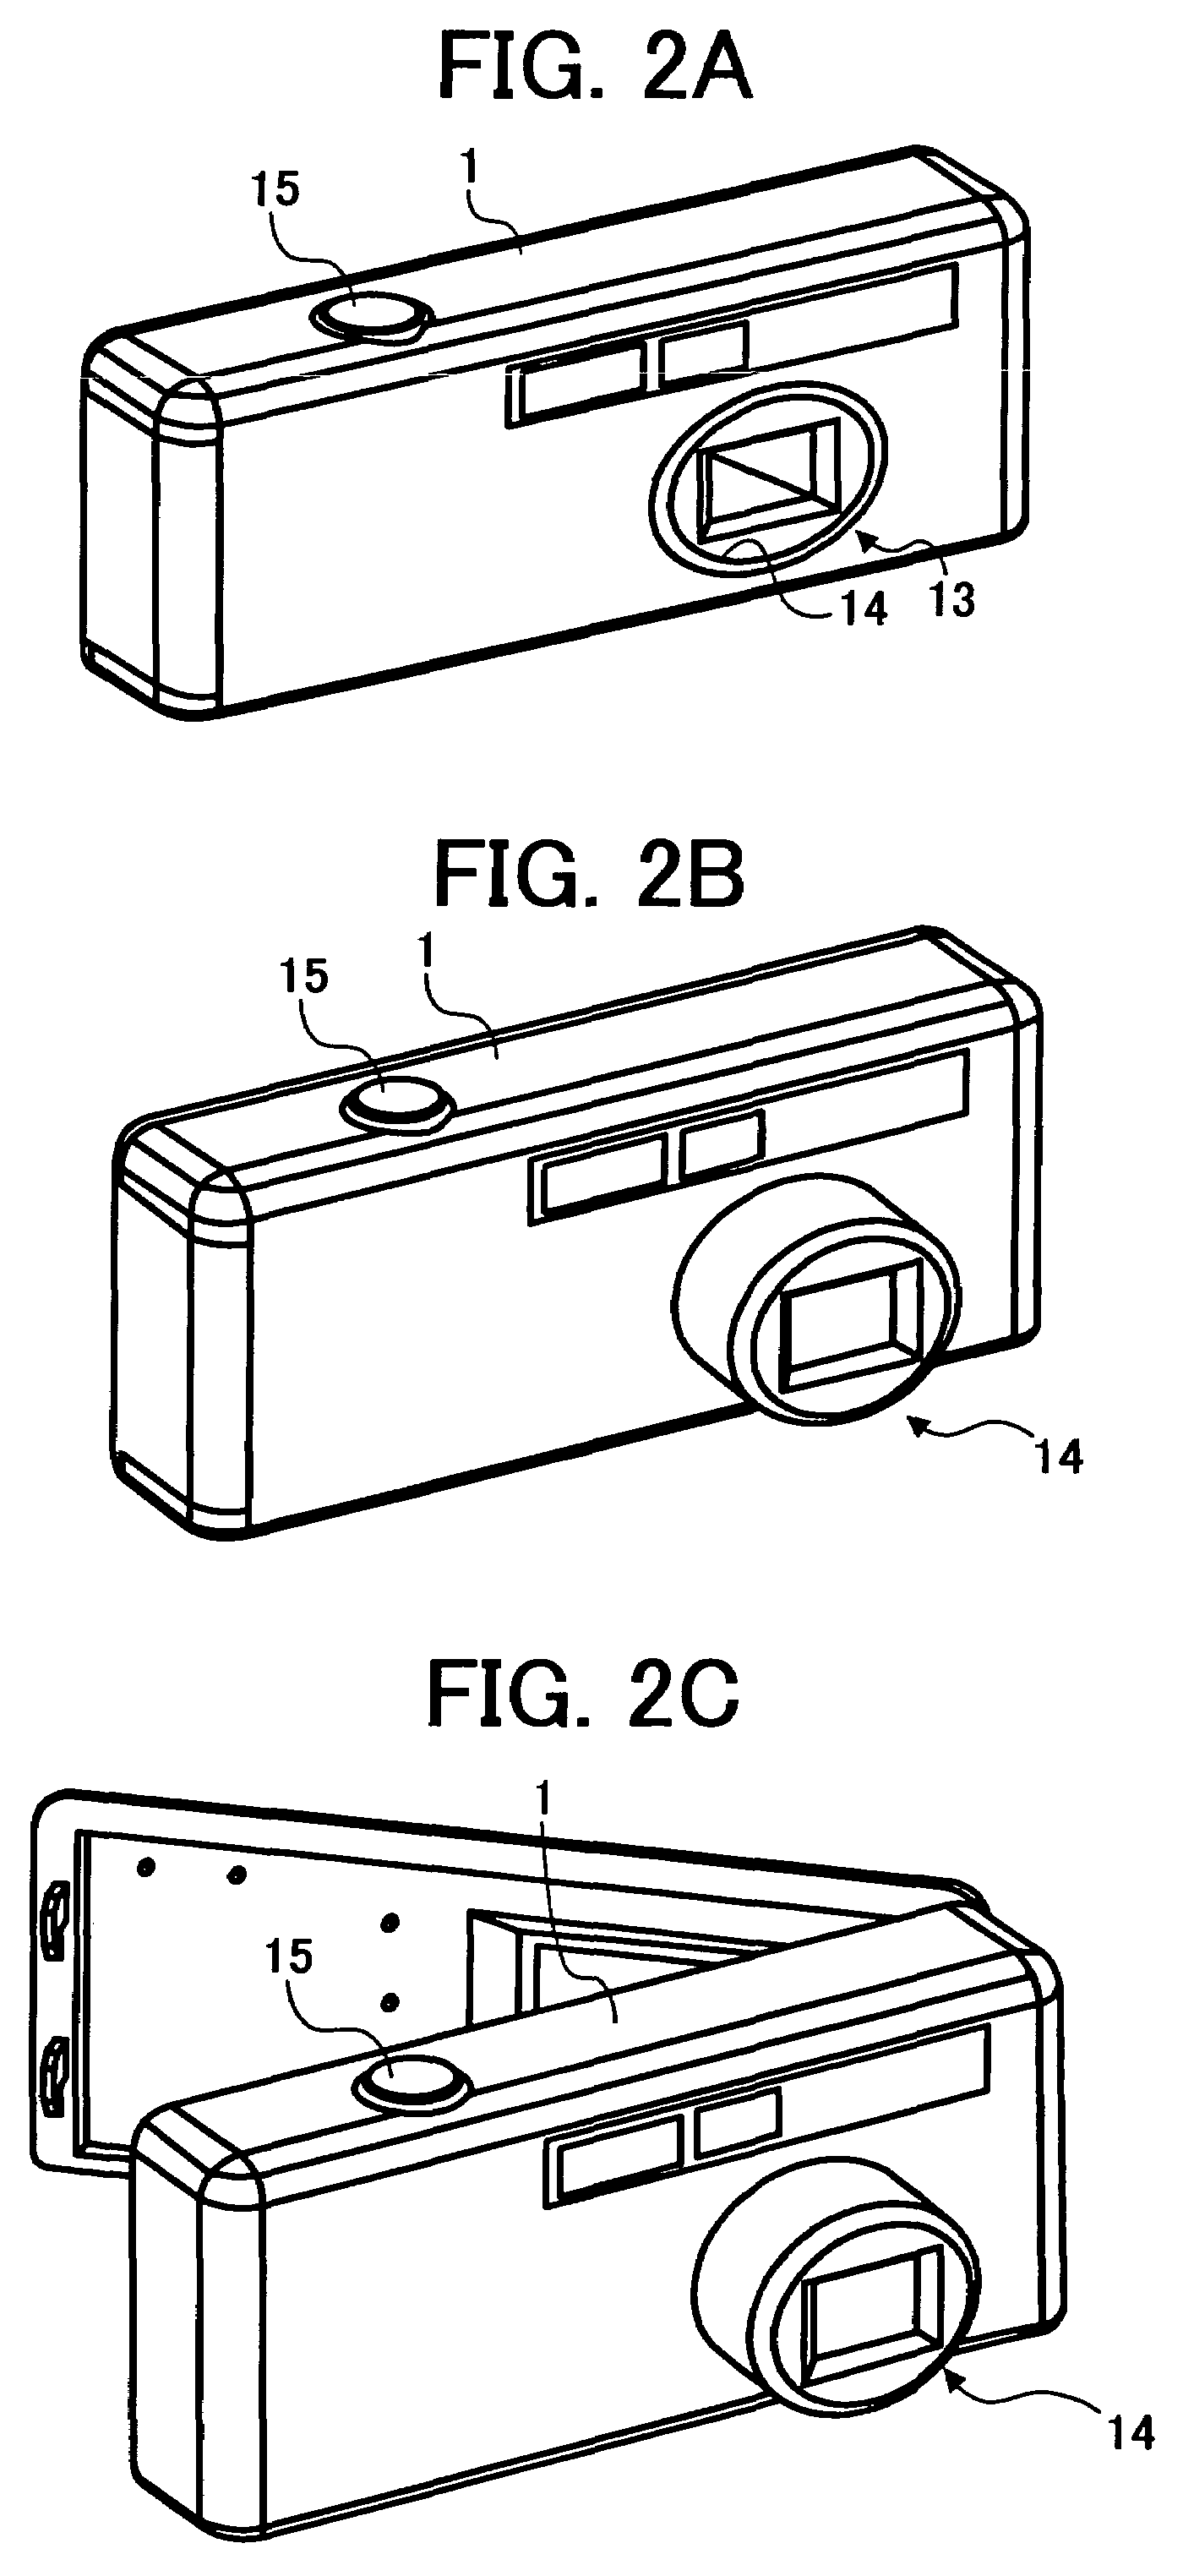 Camera and waterproof camera casing